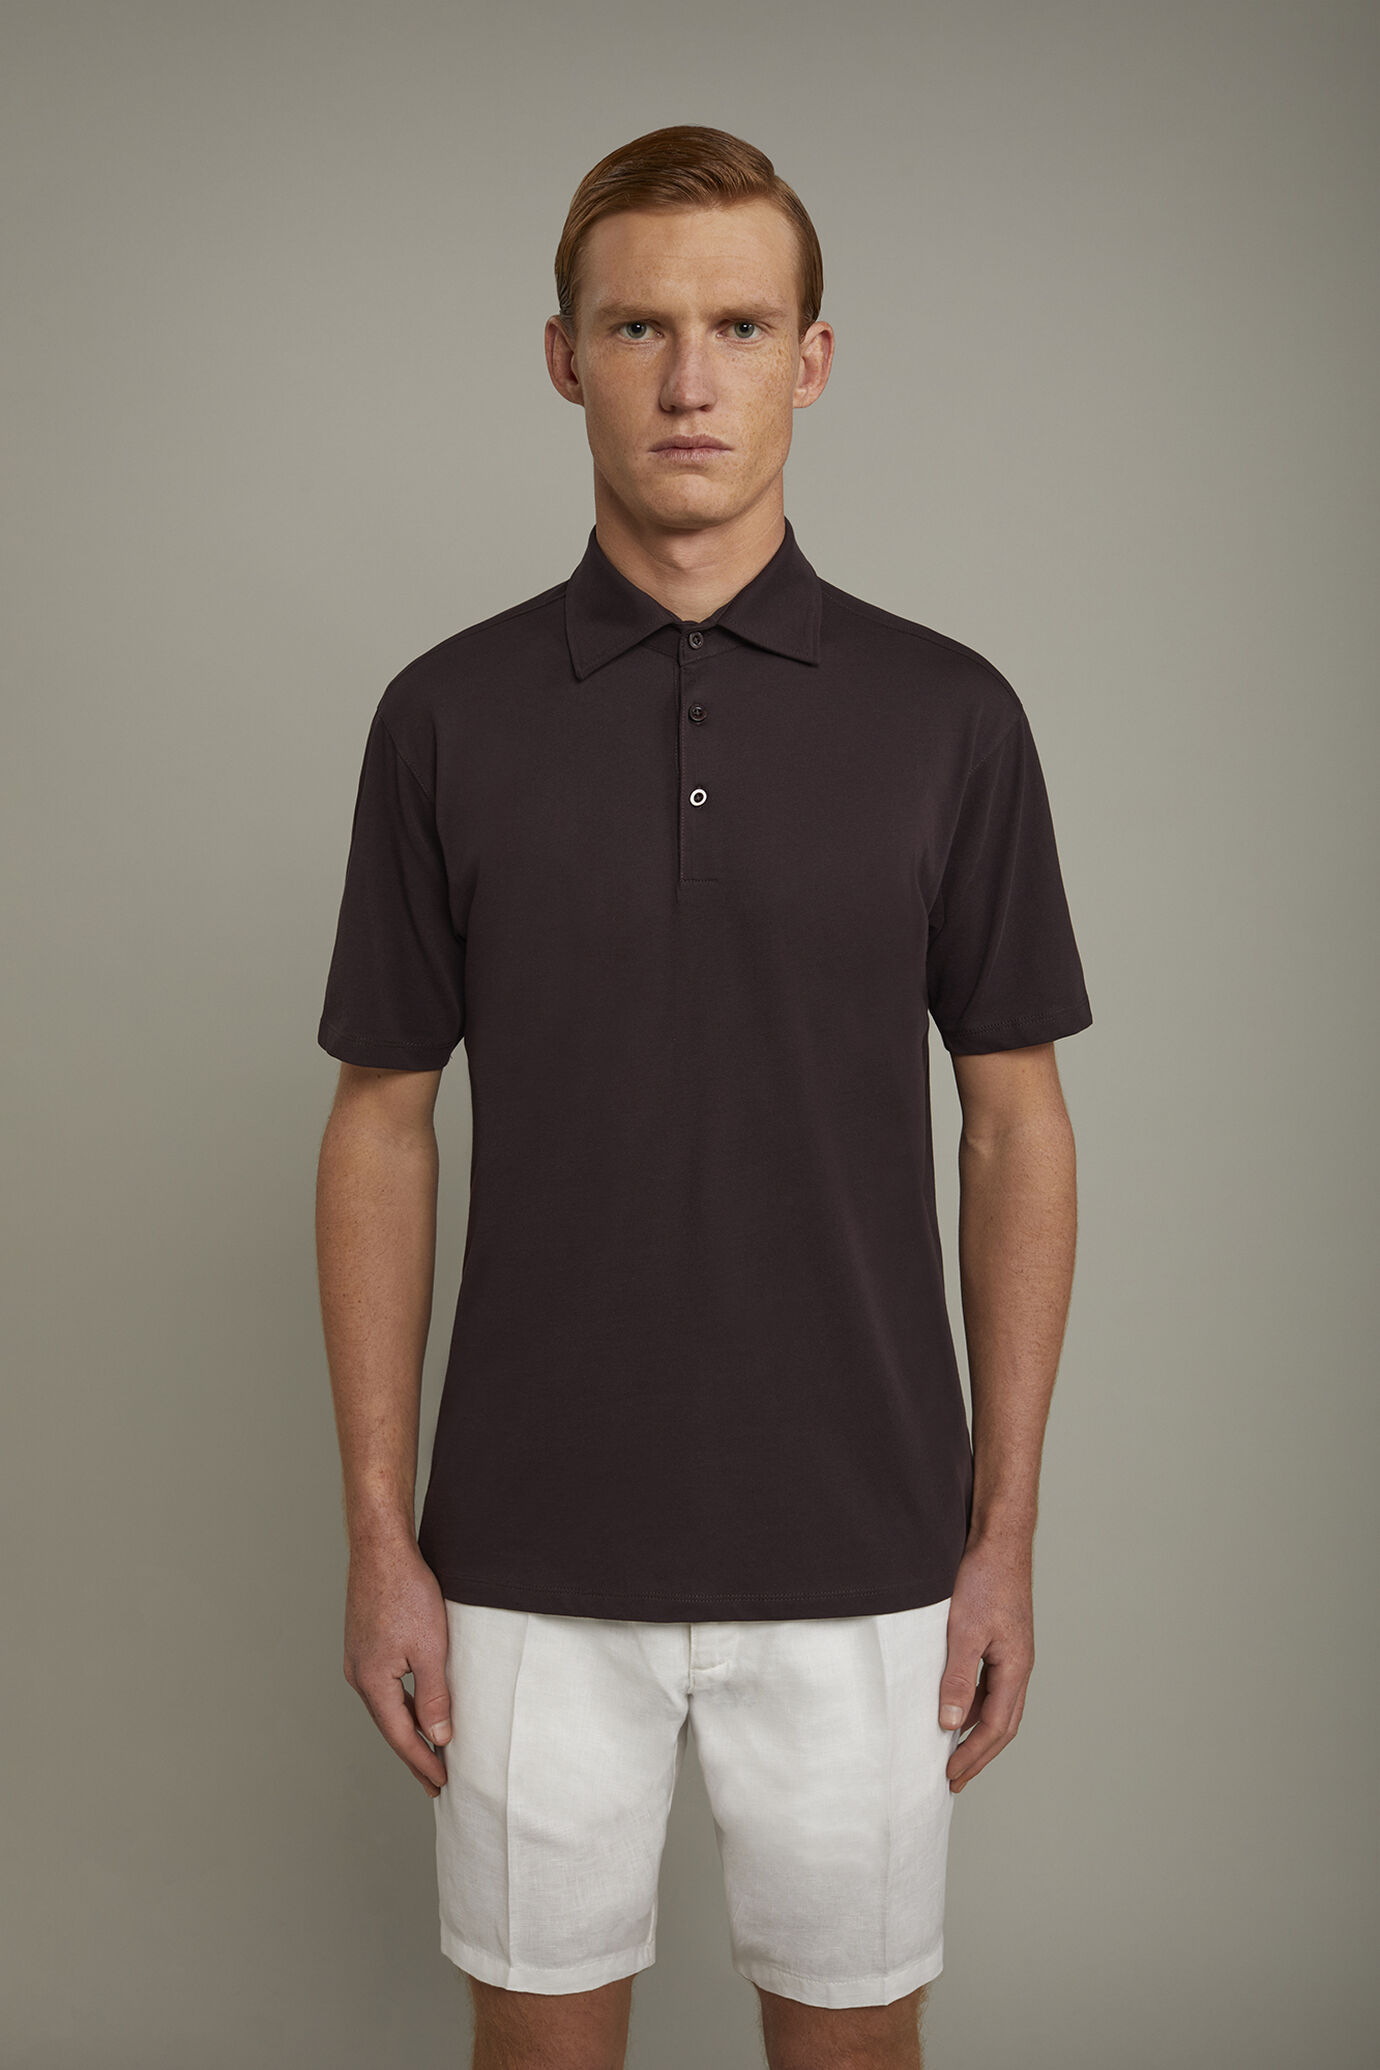 Men’s polo shirt short sleeves 100% supima cotton regular fit image number 2